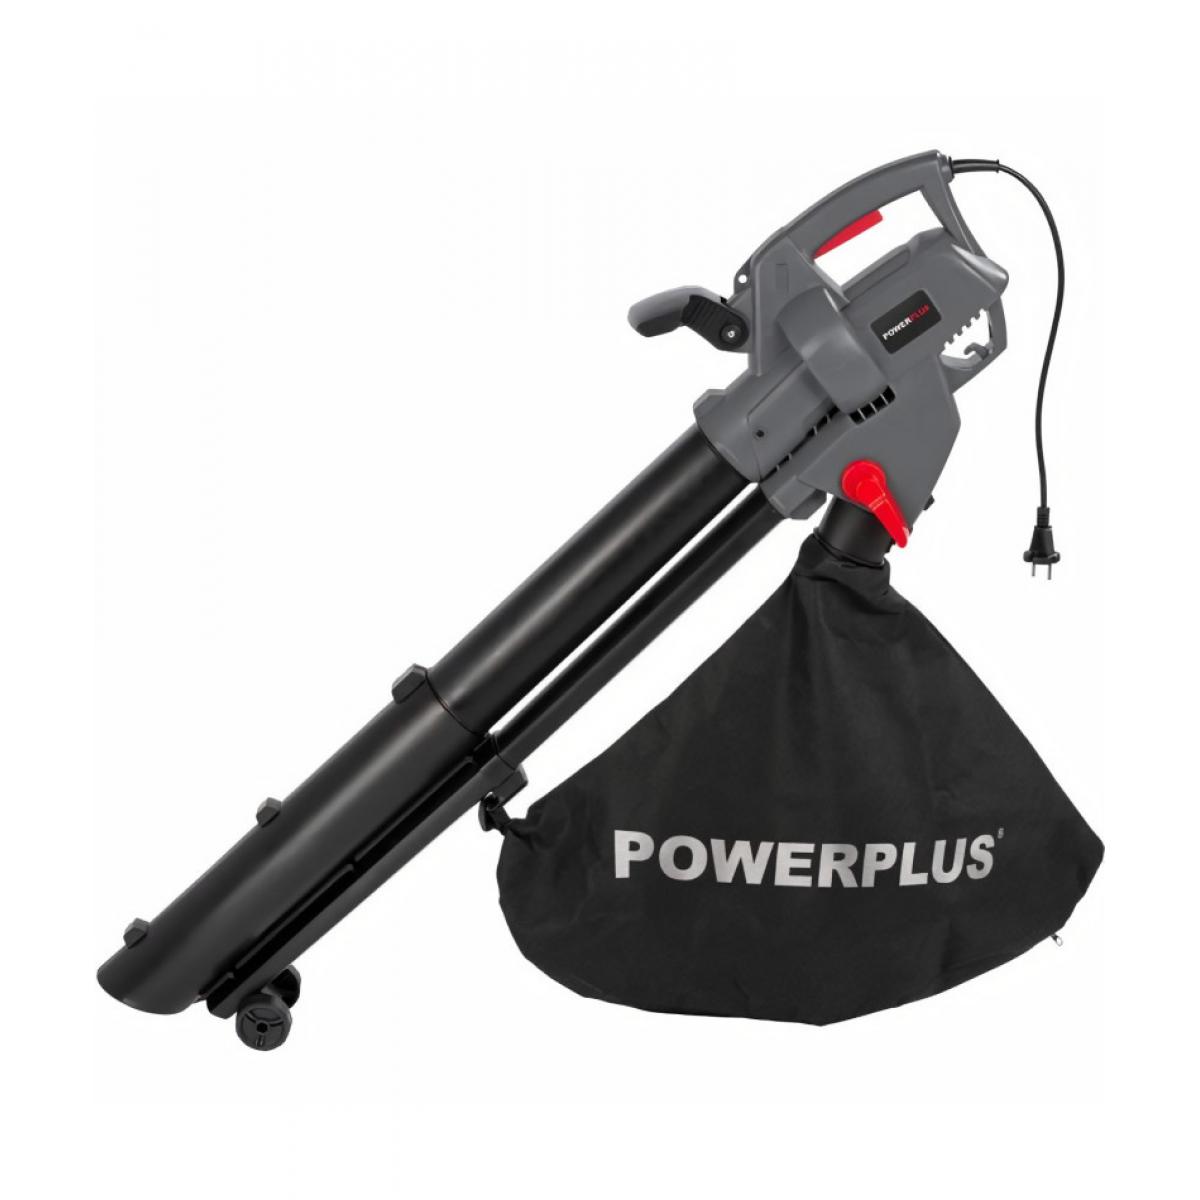 Powerplus - POWER PLUS Aspirateur souffleur broyeur de feuilles 3300W POWEG9013 - Aspirateurs souffleurs